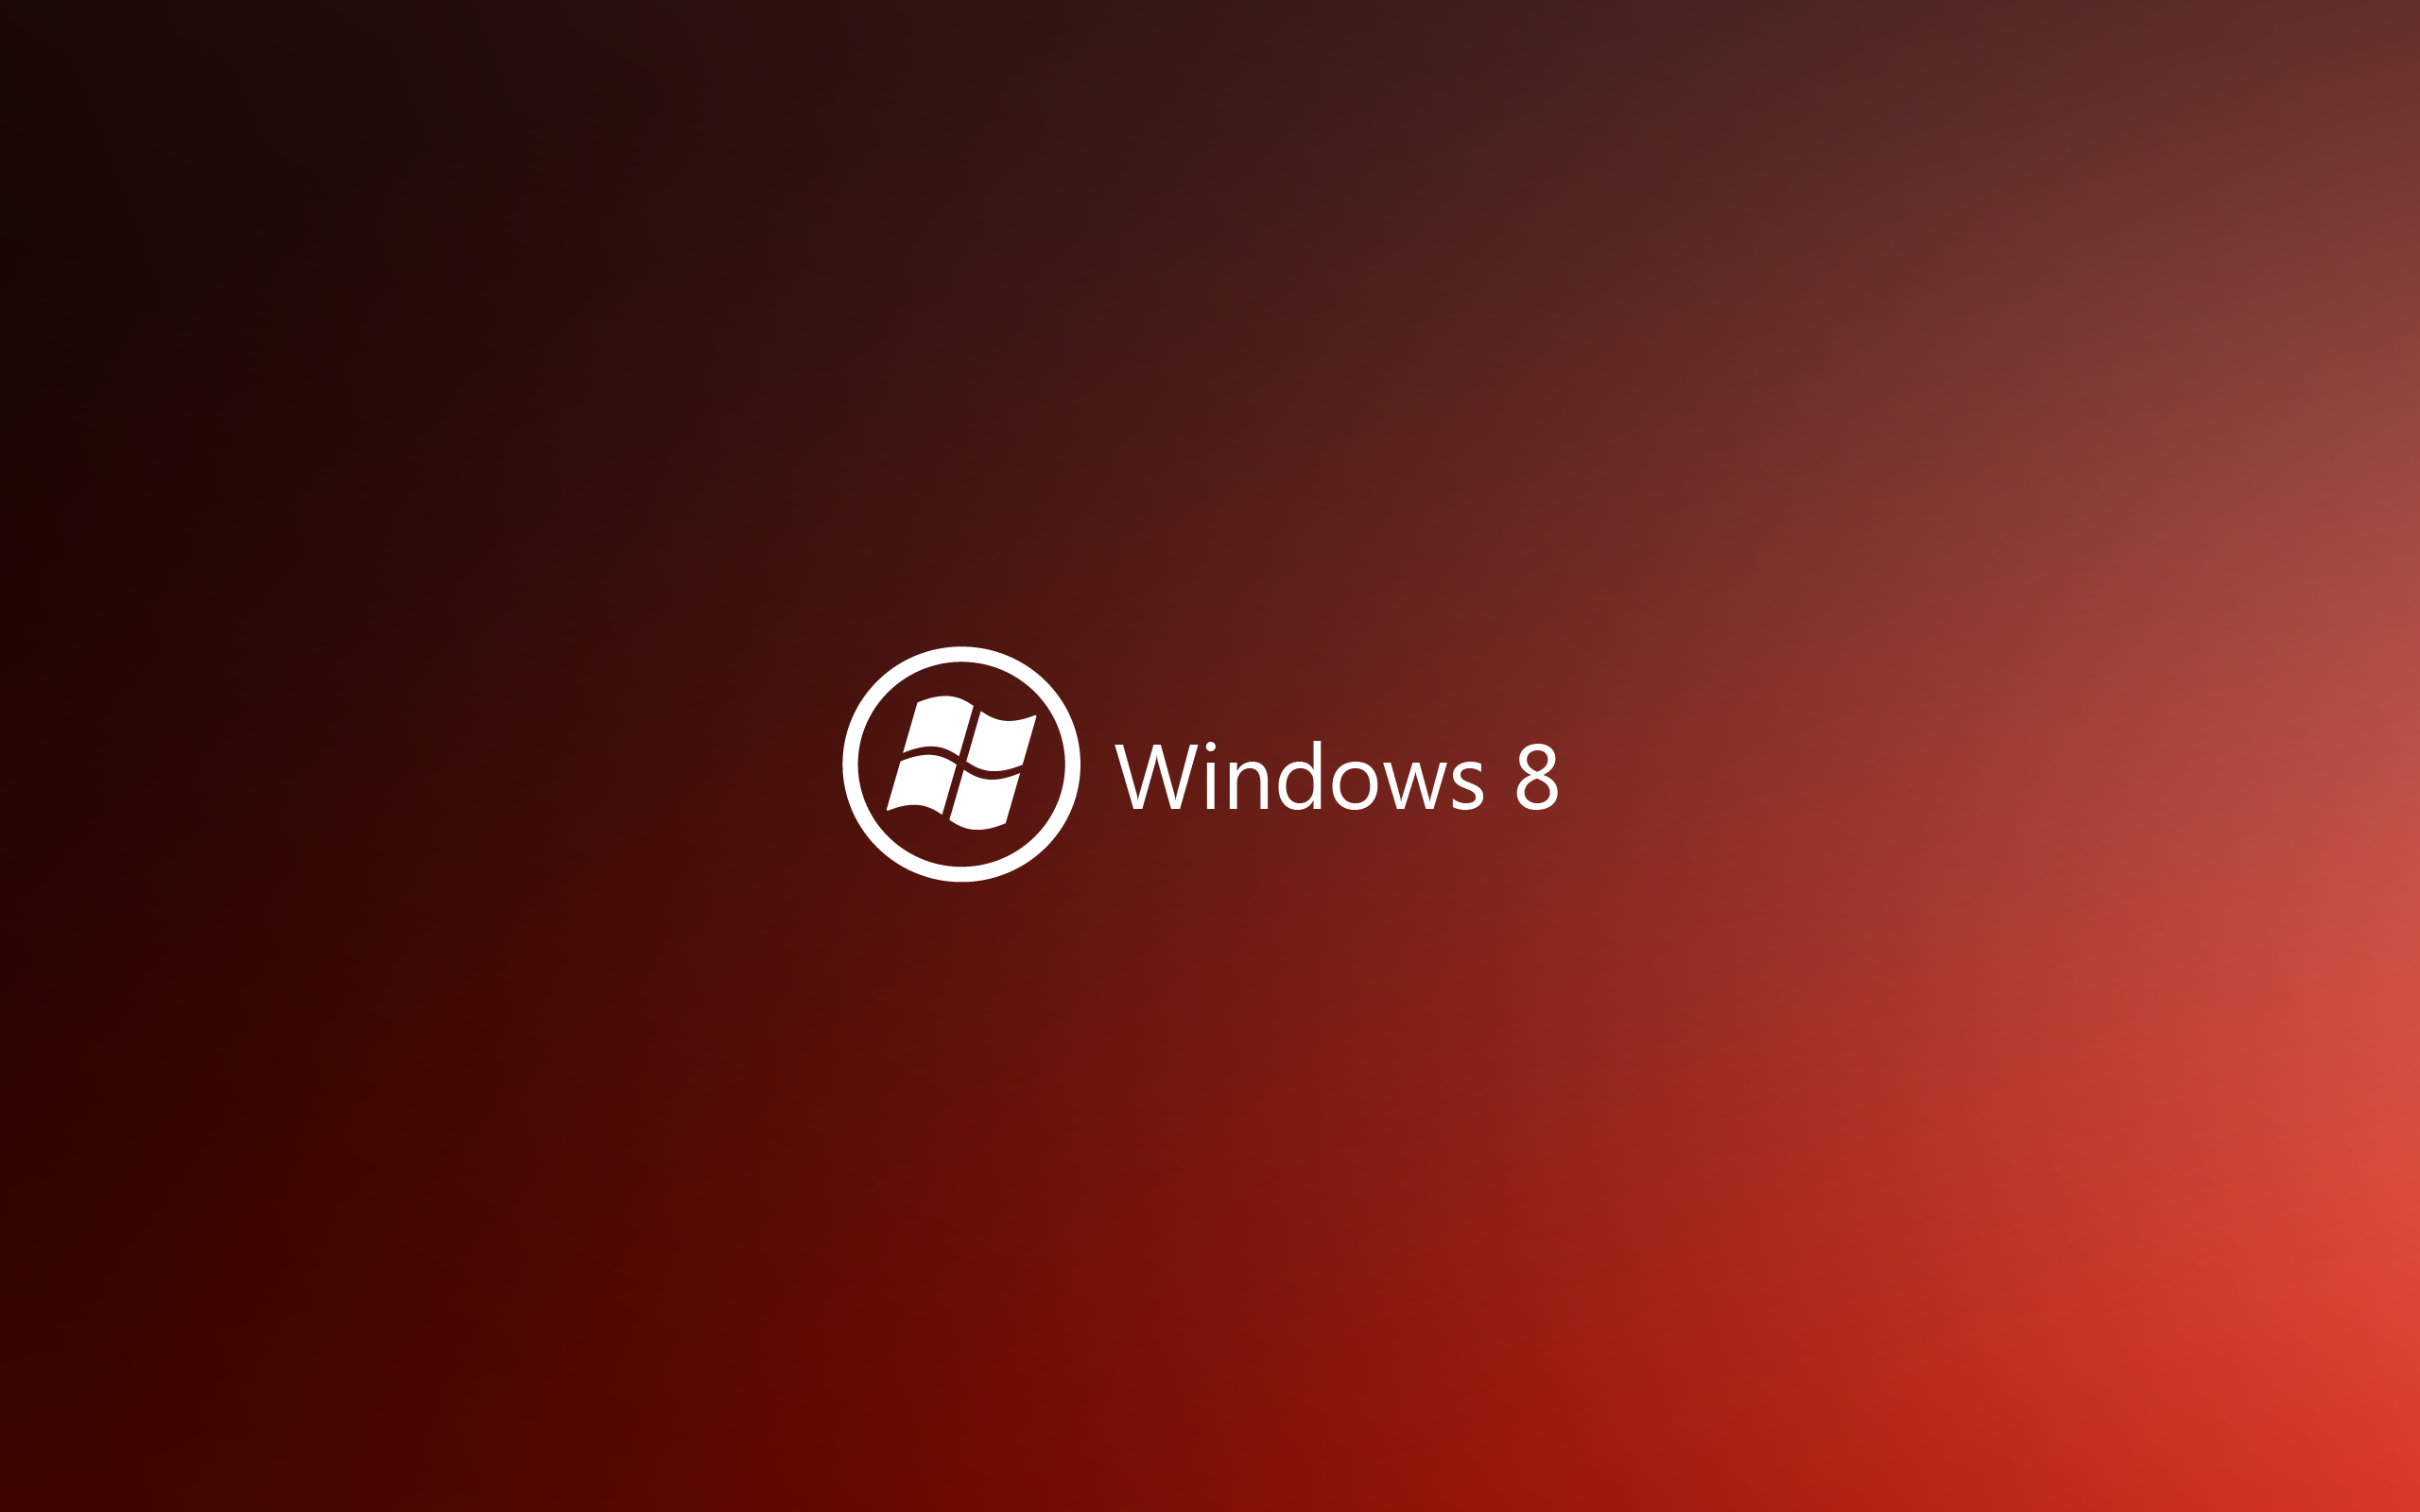 minimalistic, red, DeviantART, Windows 8 - desktop wallpaper